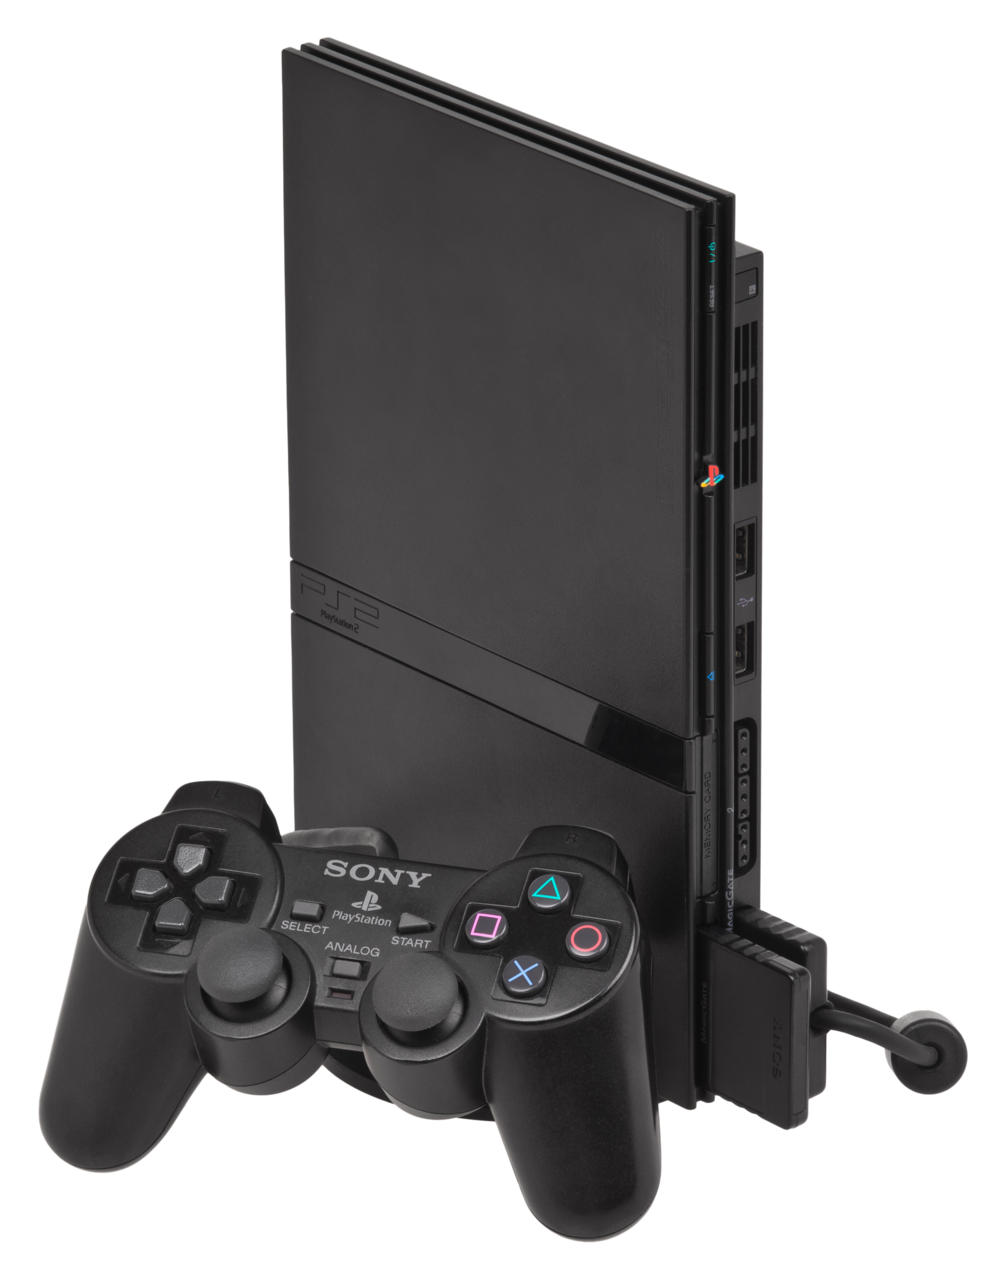 PlayStation 2 Slimline